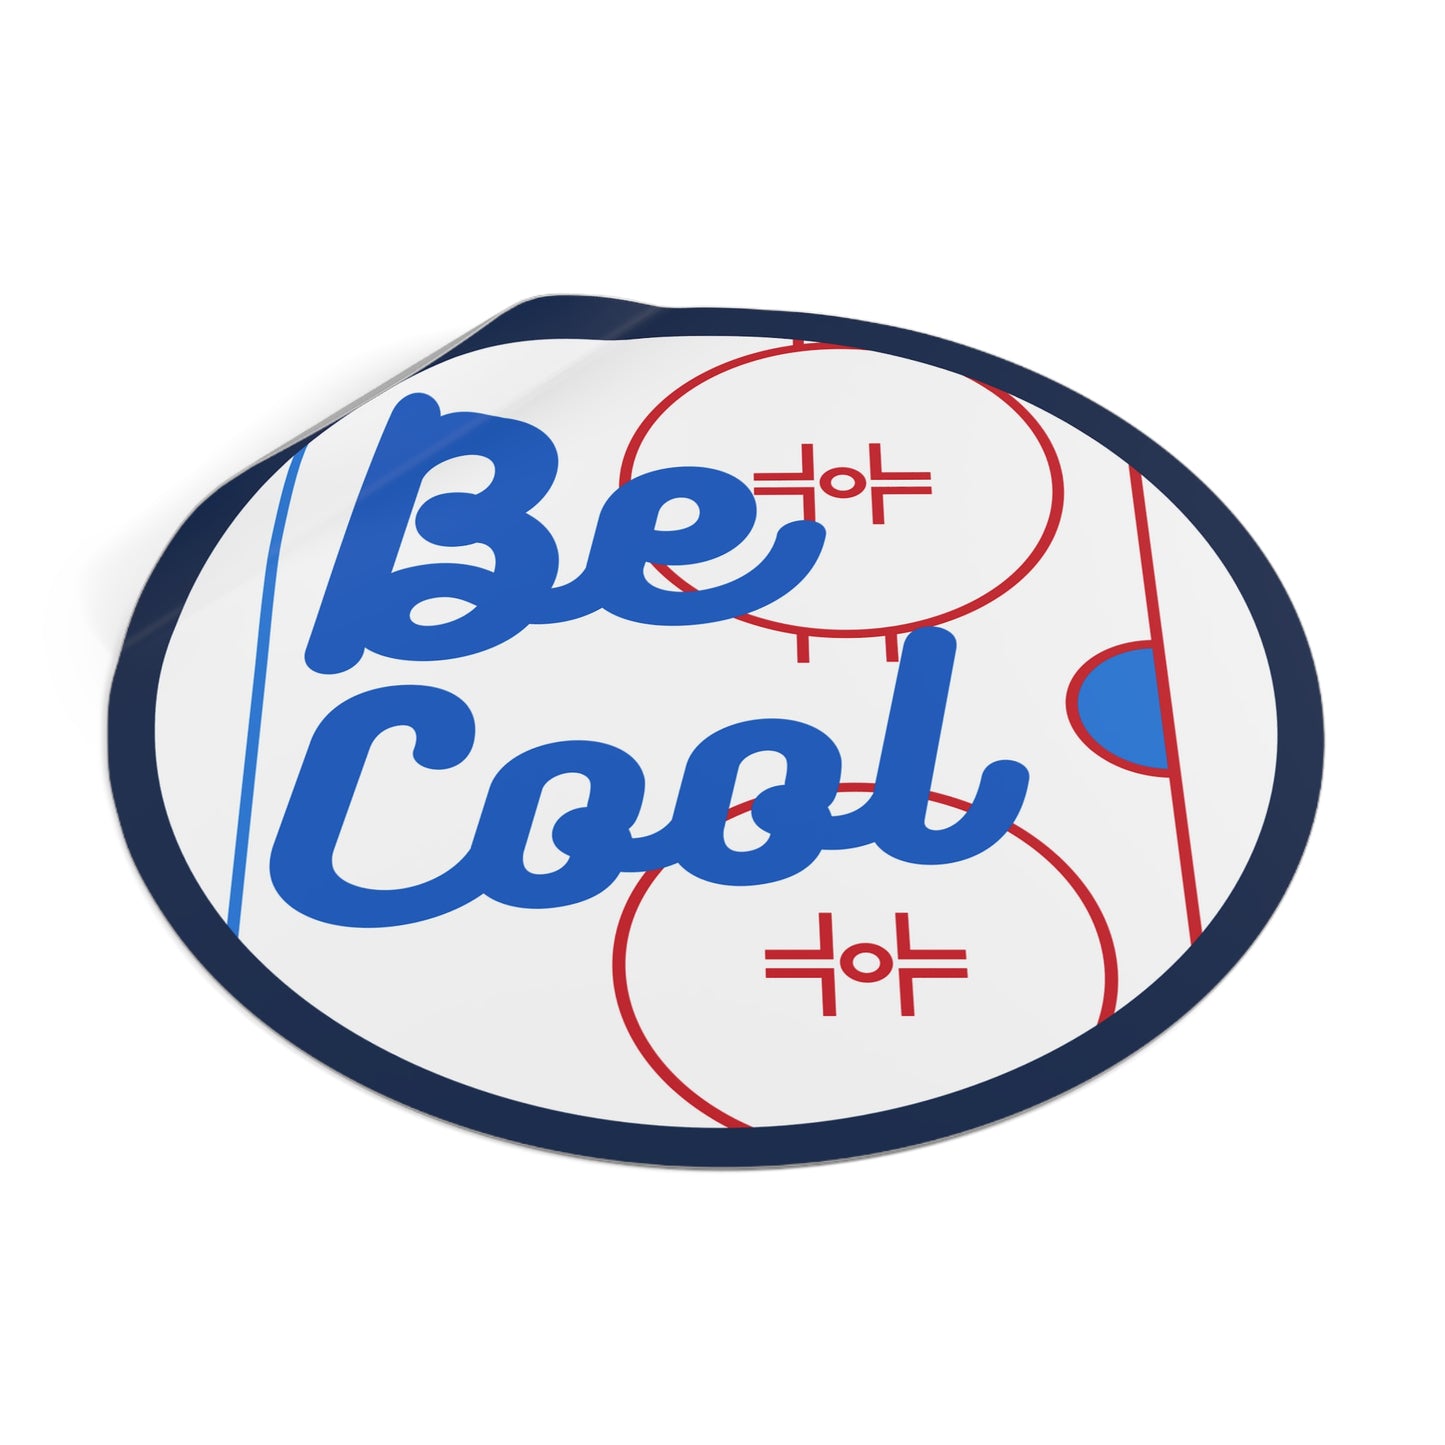 Be Cool Sticker